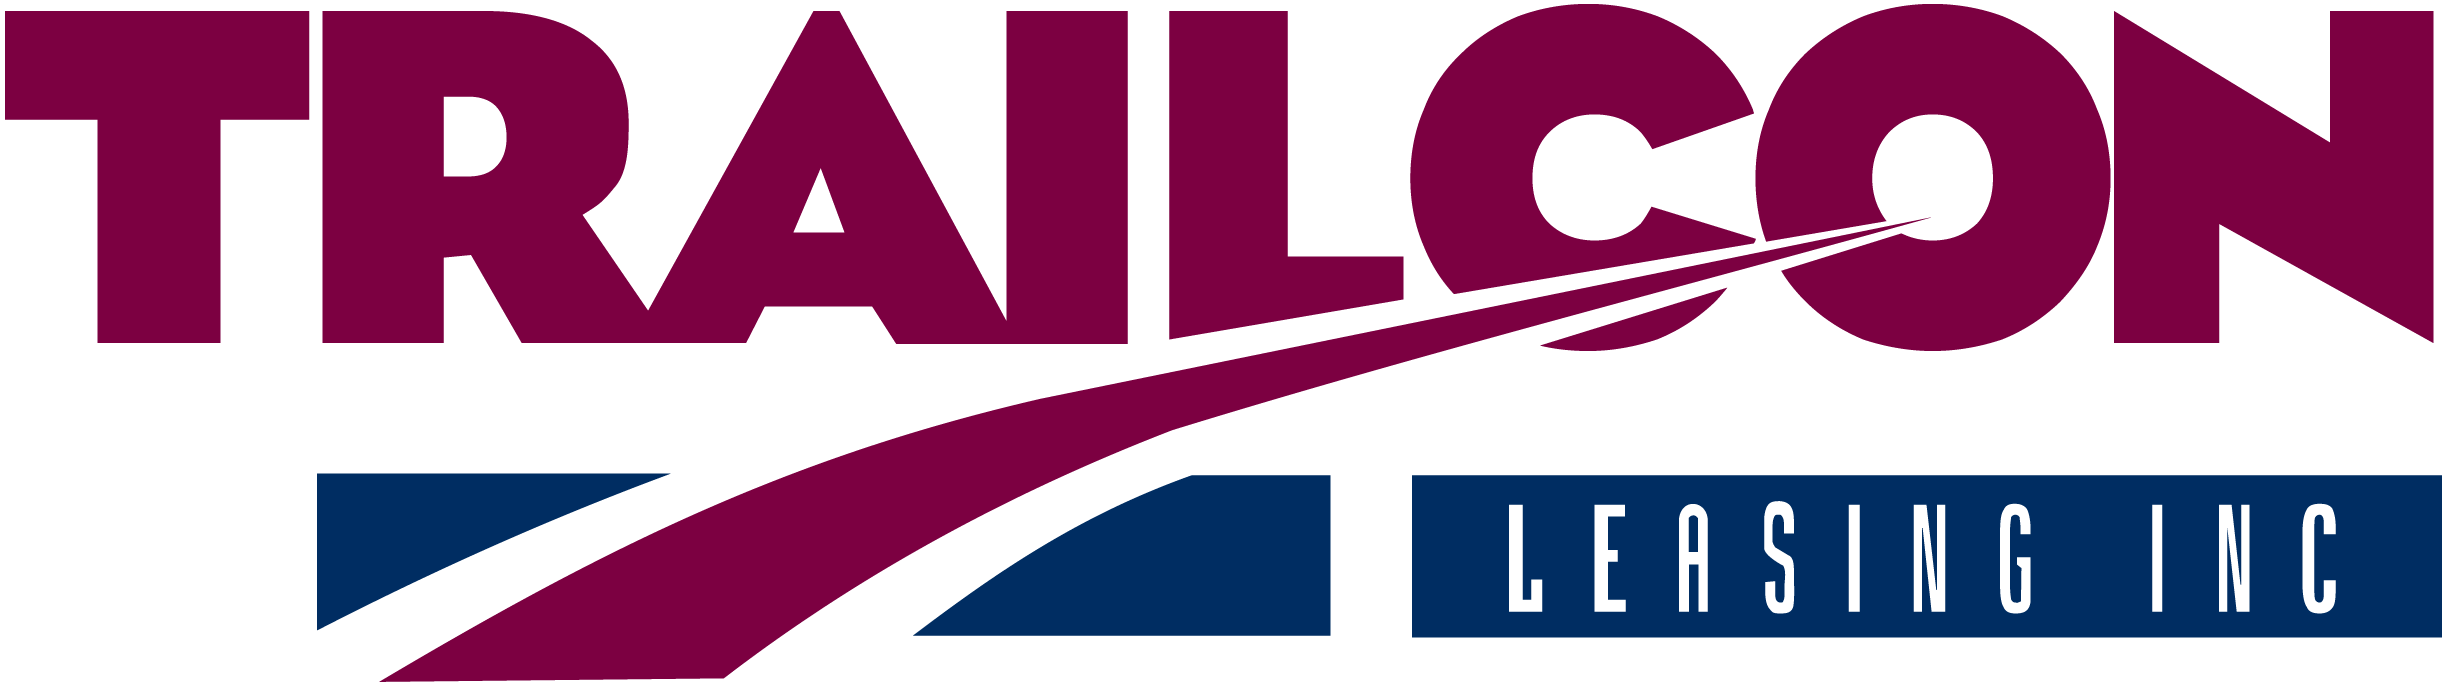 Trailcon_Logo.png